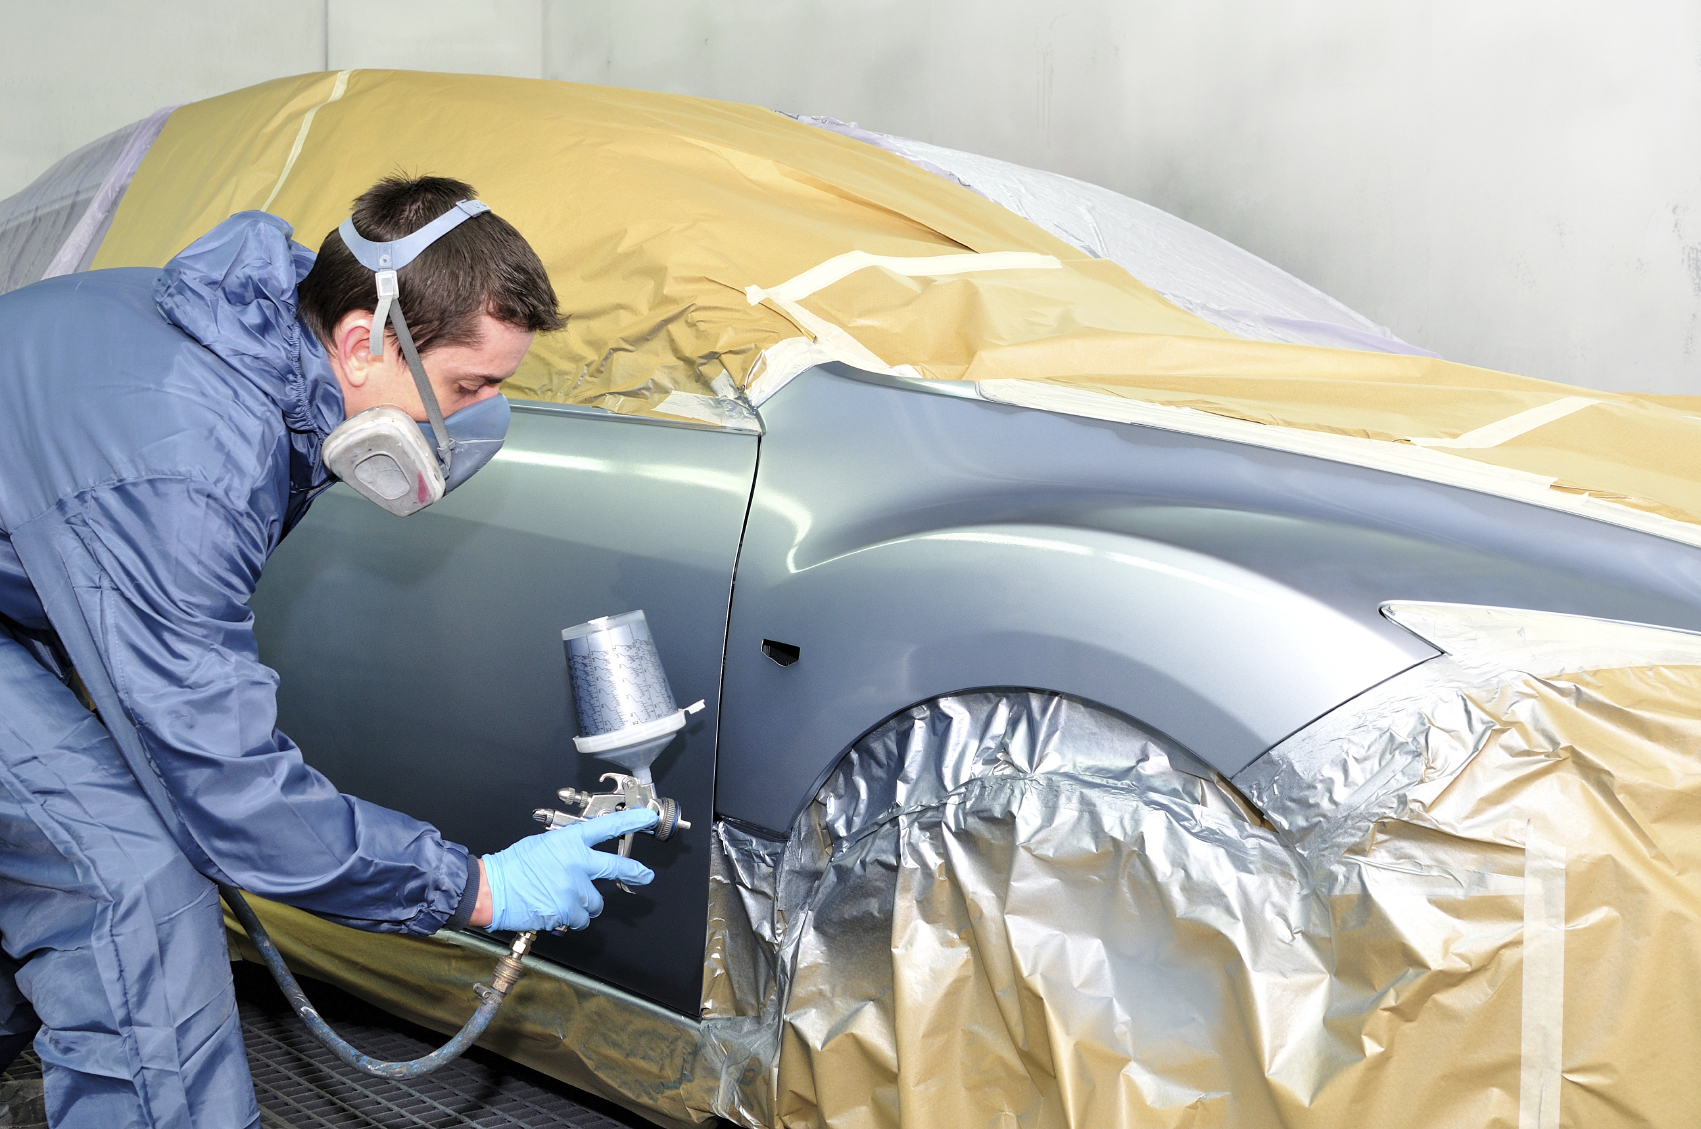 How to Repair Damaged Clear Coat - Auto Body Repair Hacks Revealed 